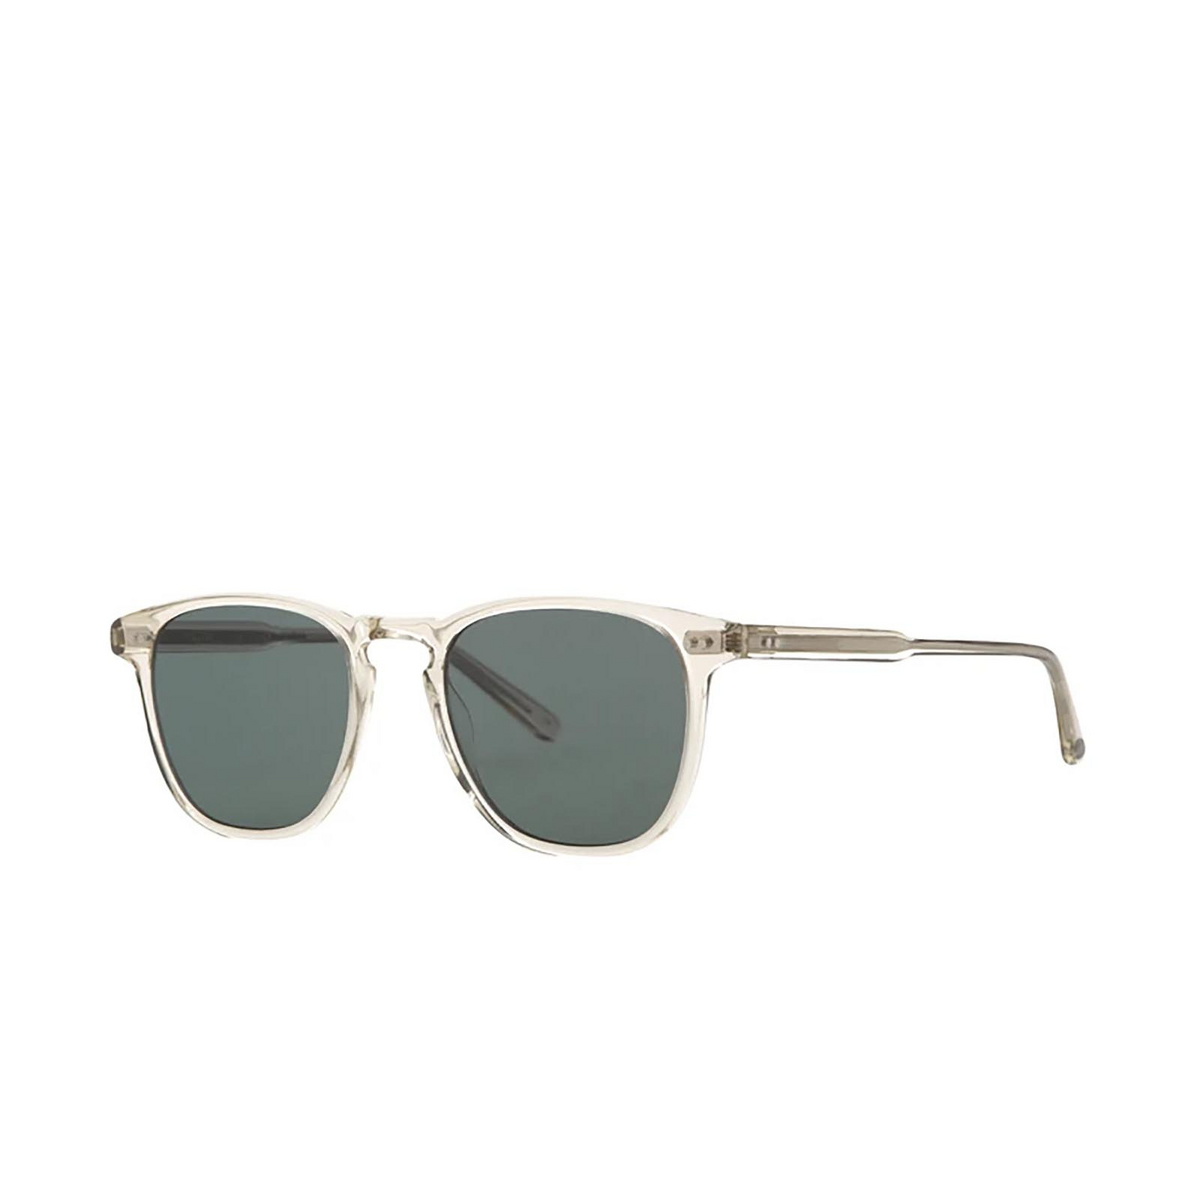 Garrett Leight® Sunglasses: Brooks Sun color Champagne Ch/sfbs - front view.